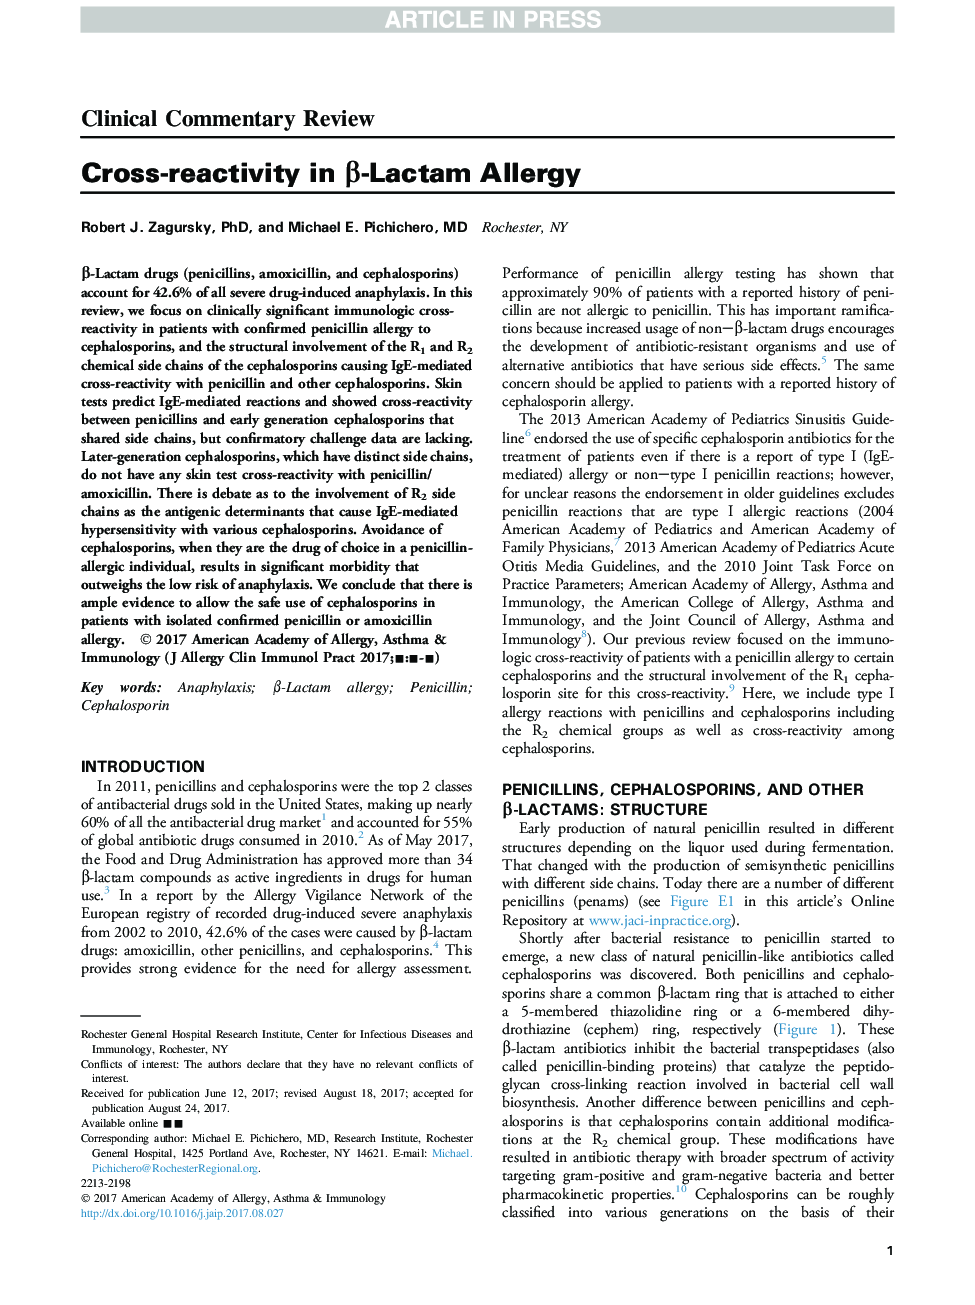 Cross-reactivity in Î²-Lactam Allergy